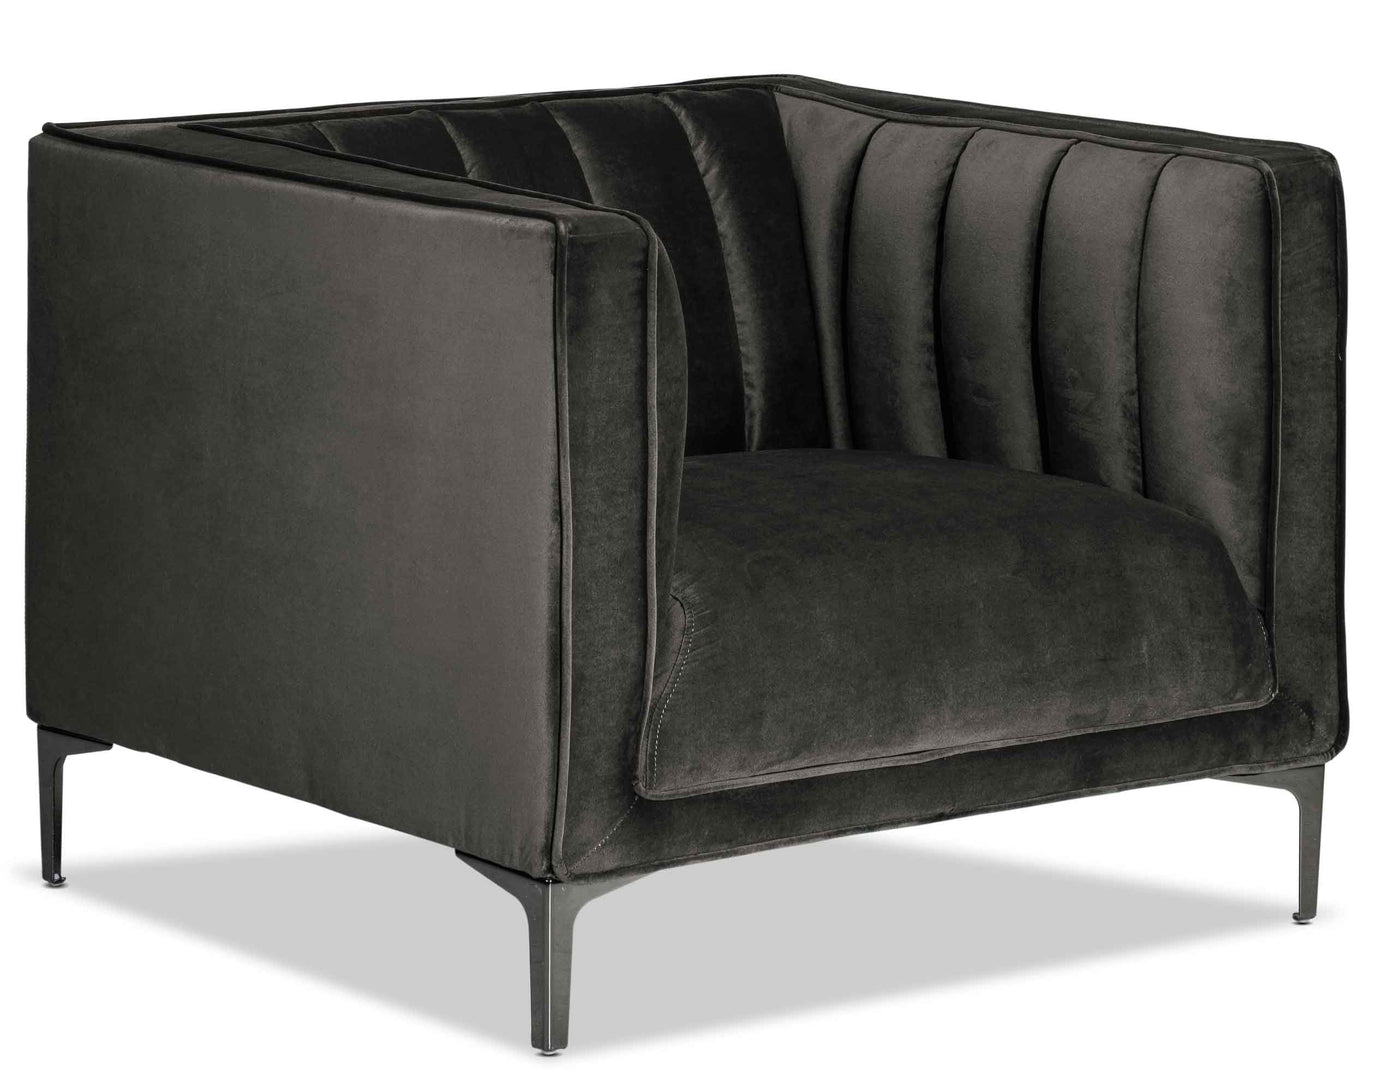 Celina Sofa, Loveseat and Chair Set - Dark Grey